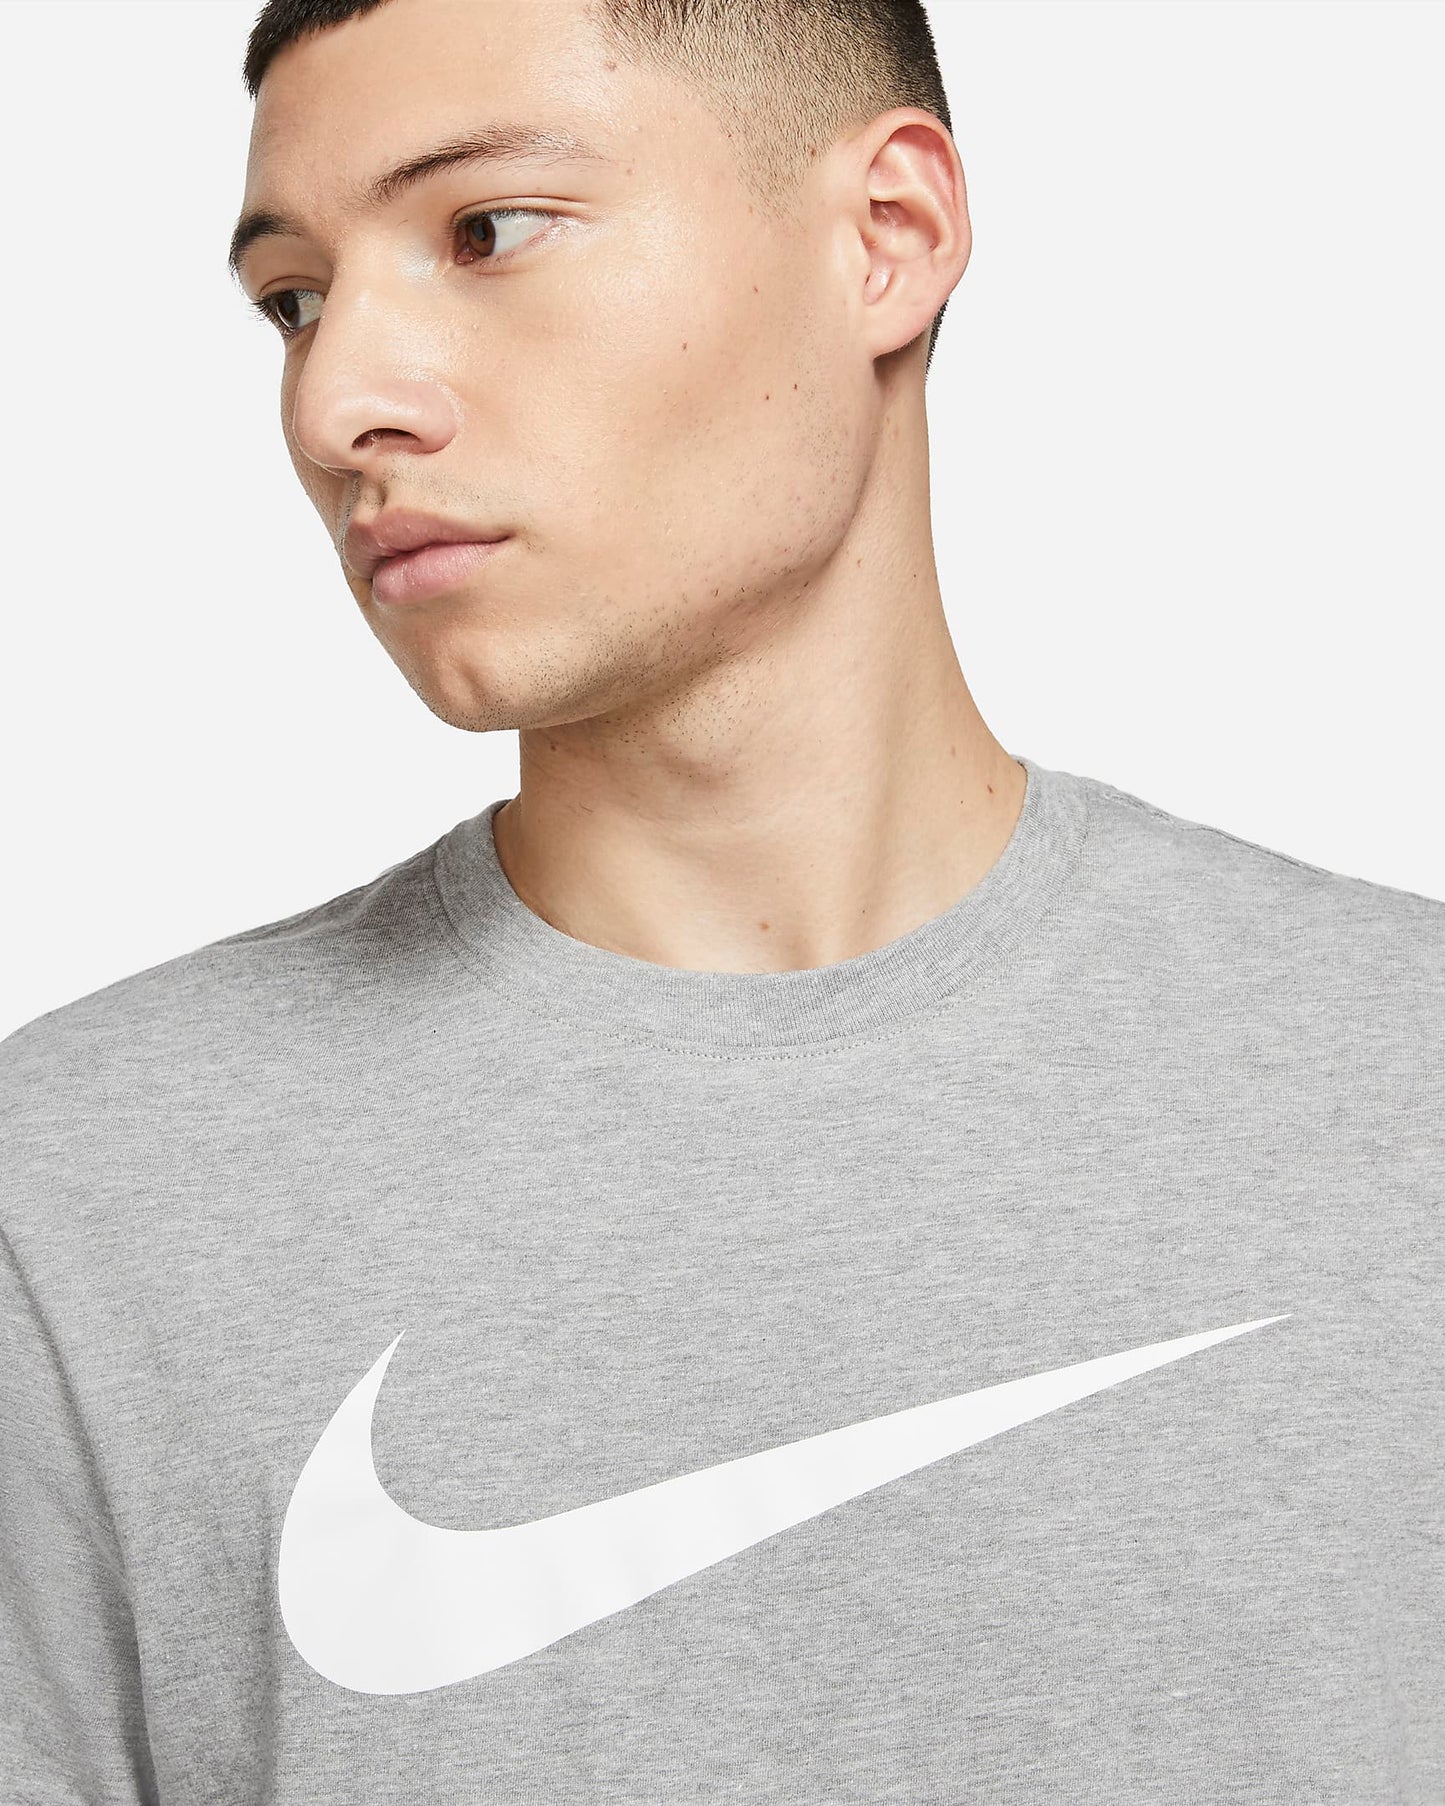 Nike Men's Sportswear Swoosh T-Shirt, Dark Grey Heather/White